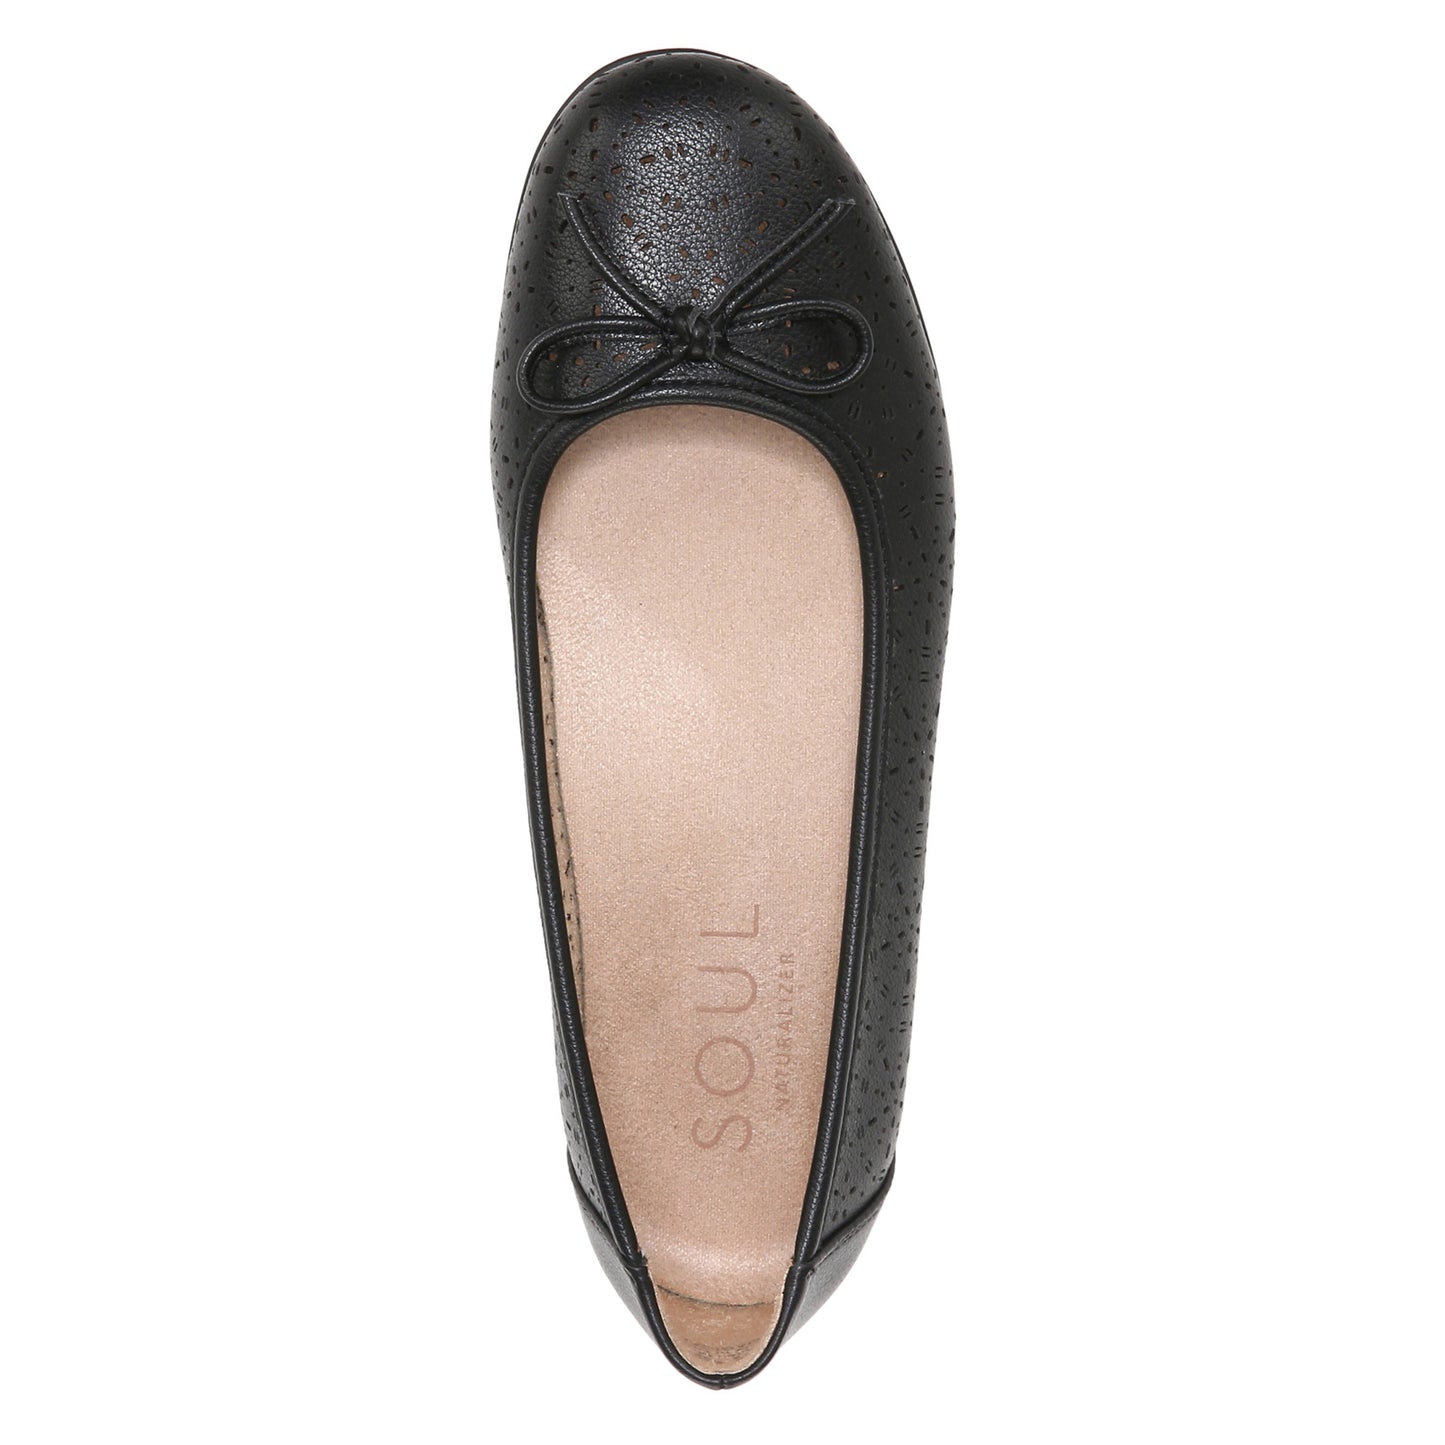 Peltz Shoes  Women's SOUL Naturalizer Magical Flat black I4637S2001